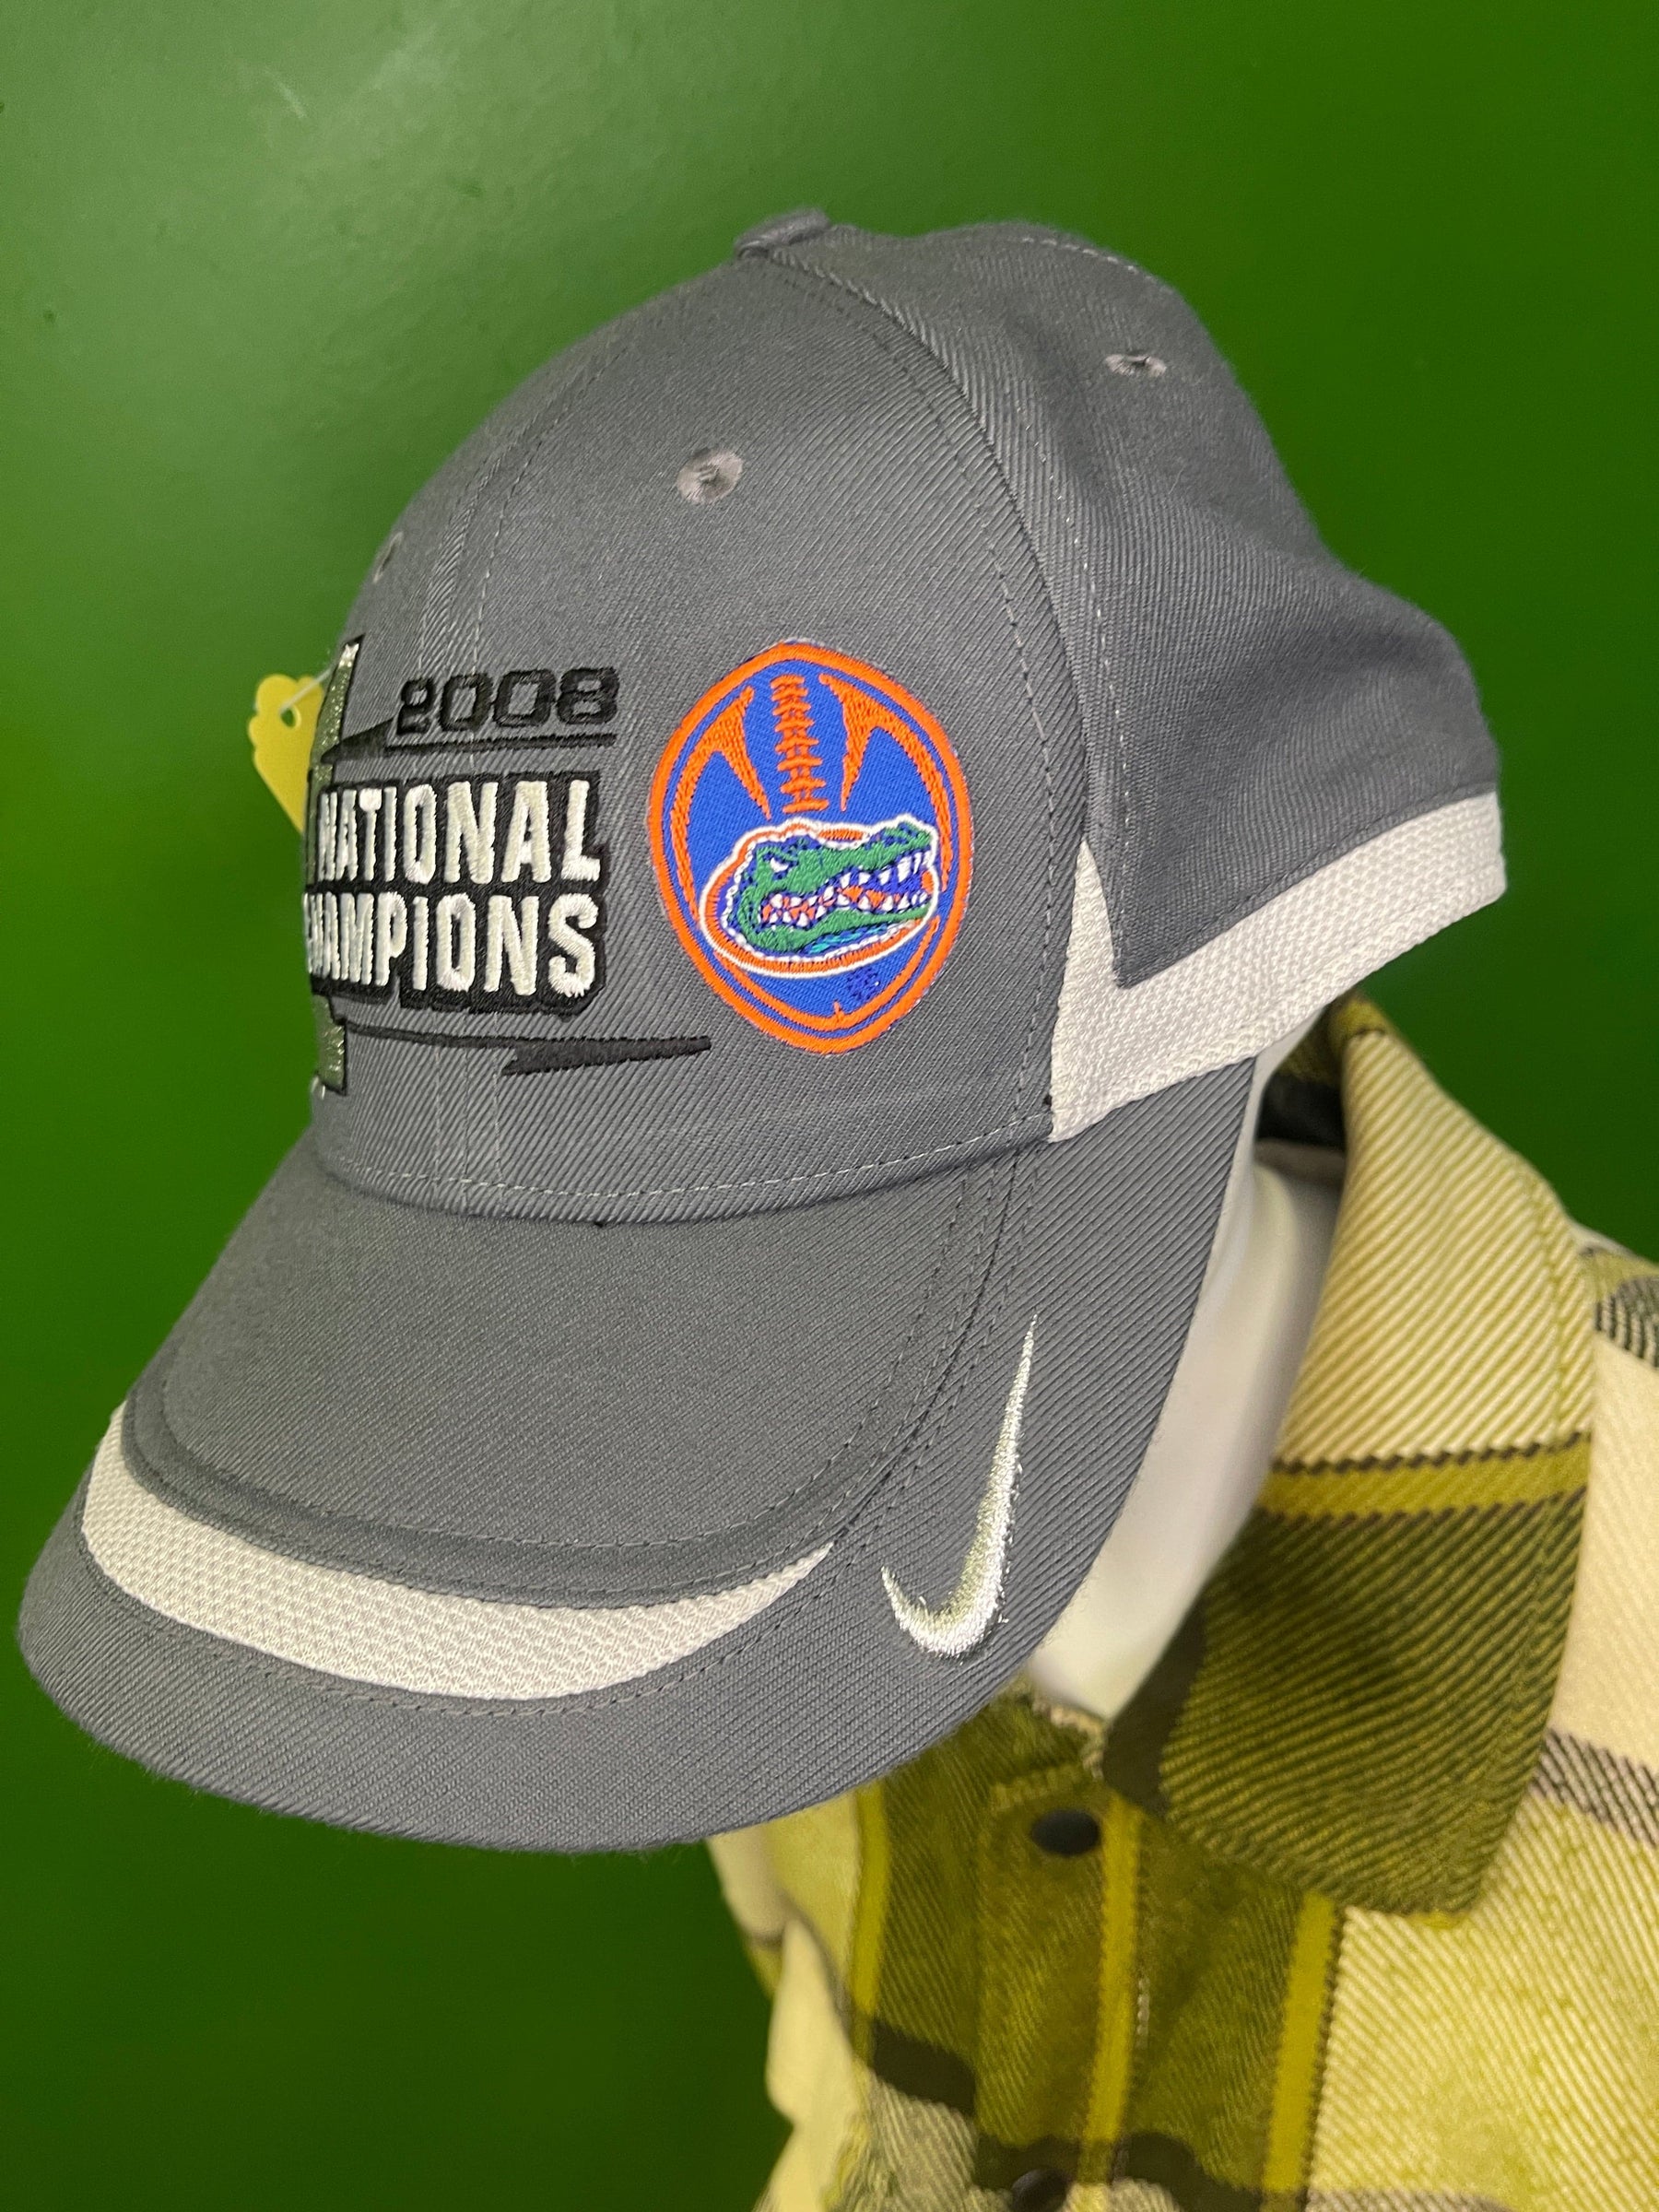 NCAA Florida Gators 2008 National Champions Sparkly Strapback Hat/Cap Women's OSFM